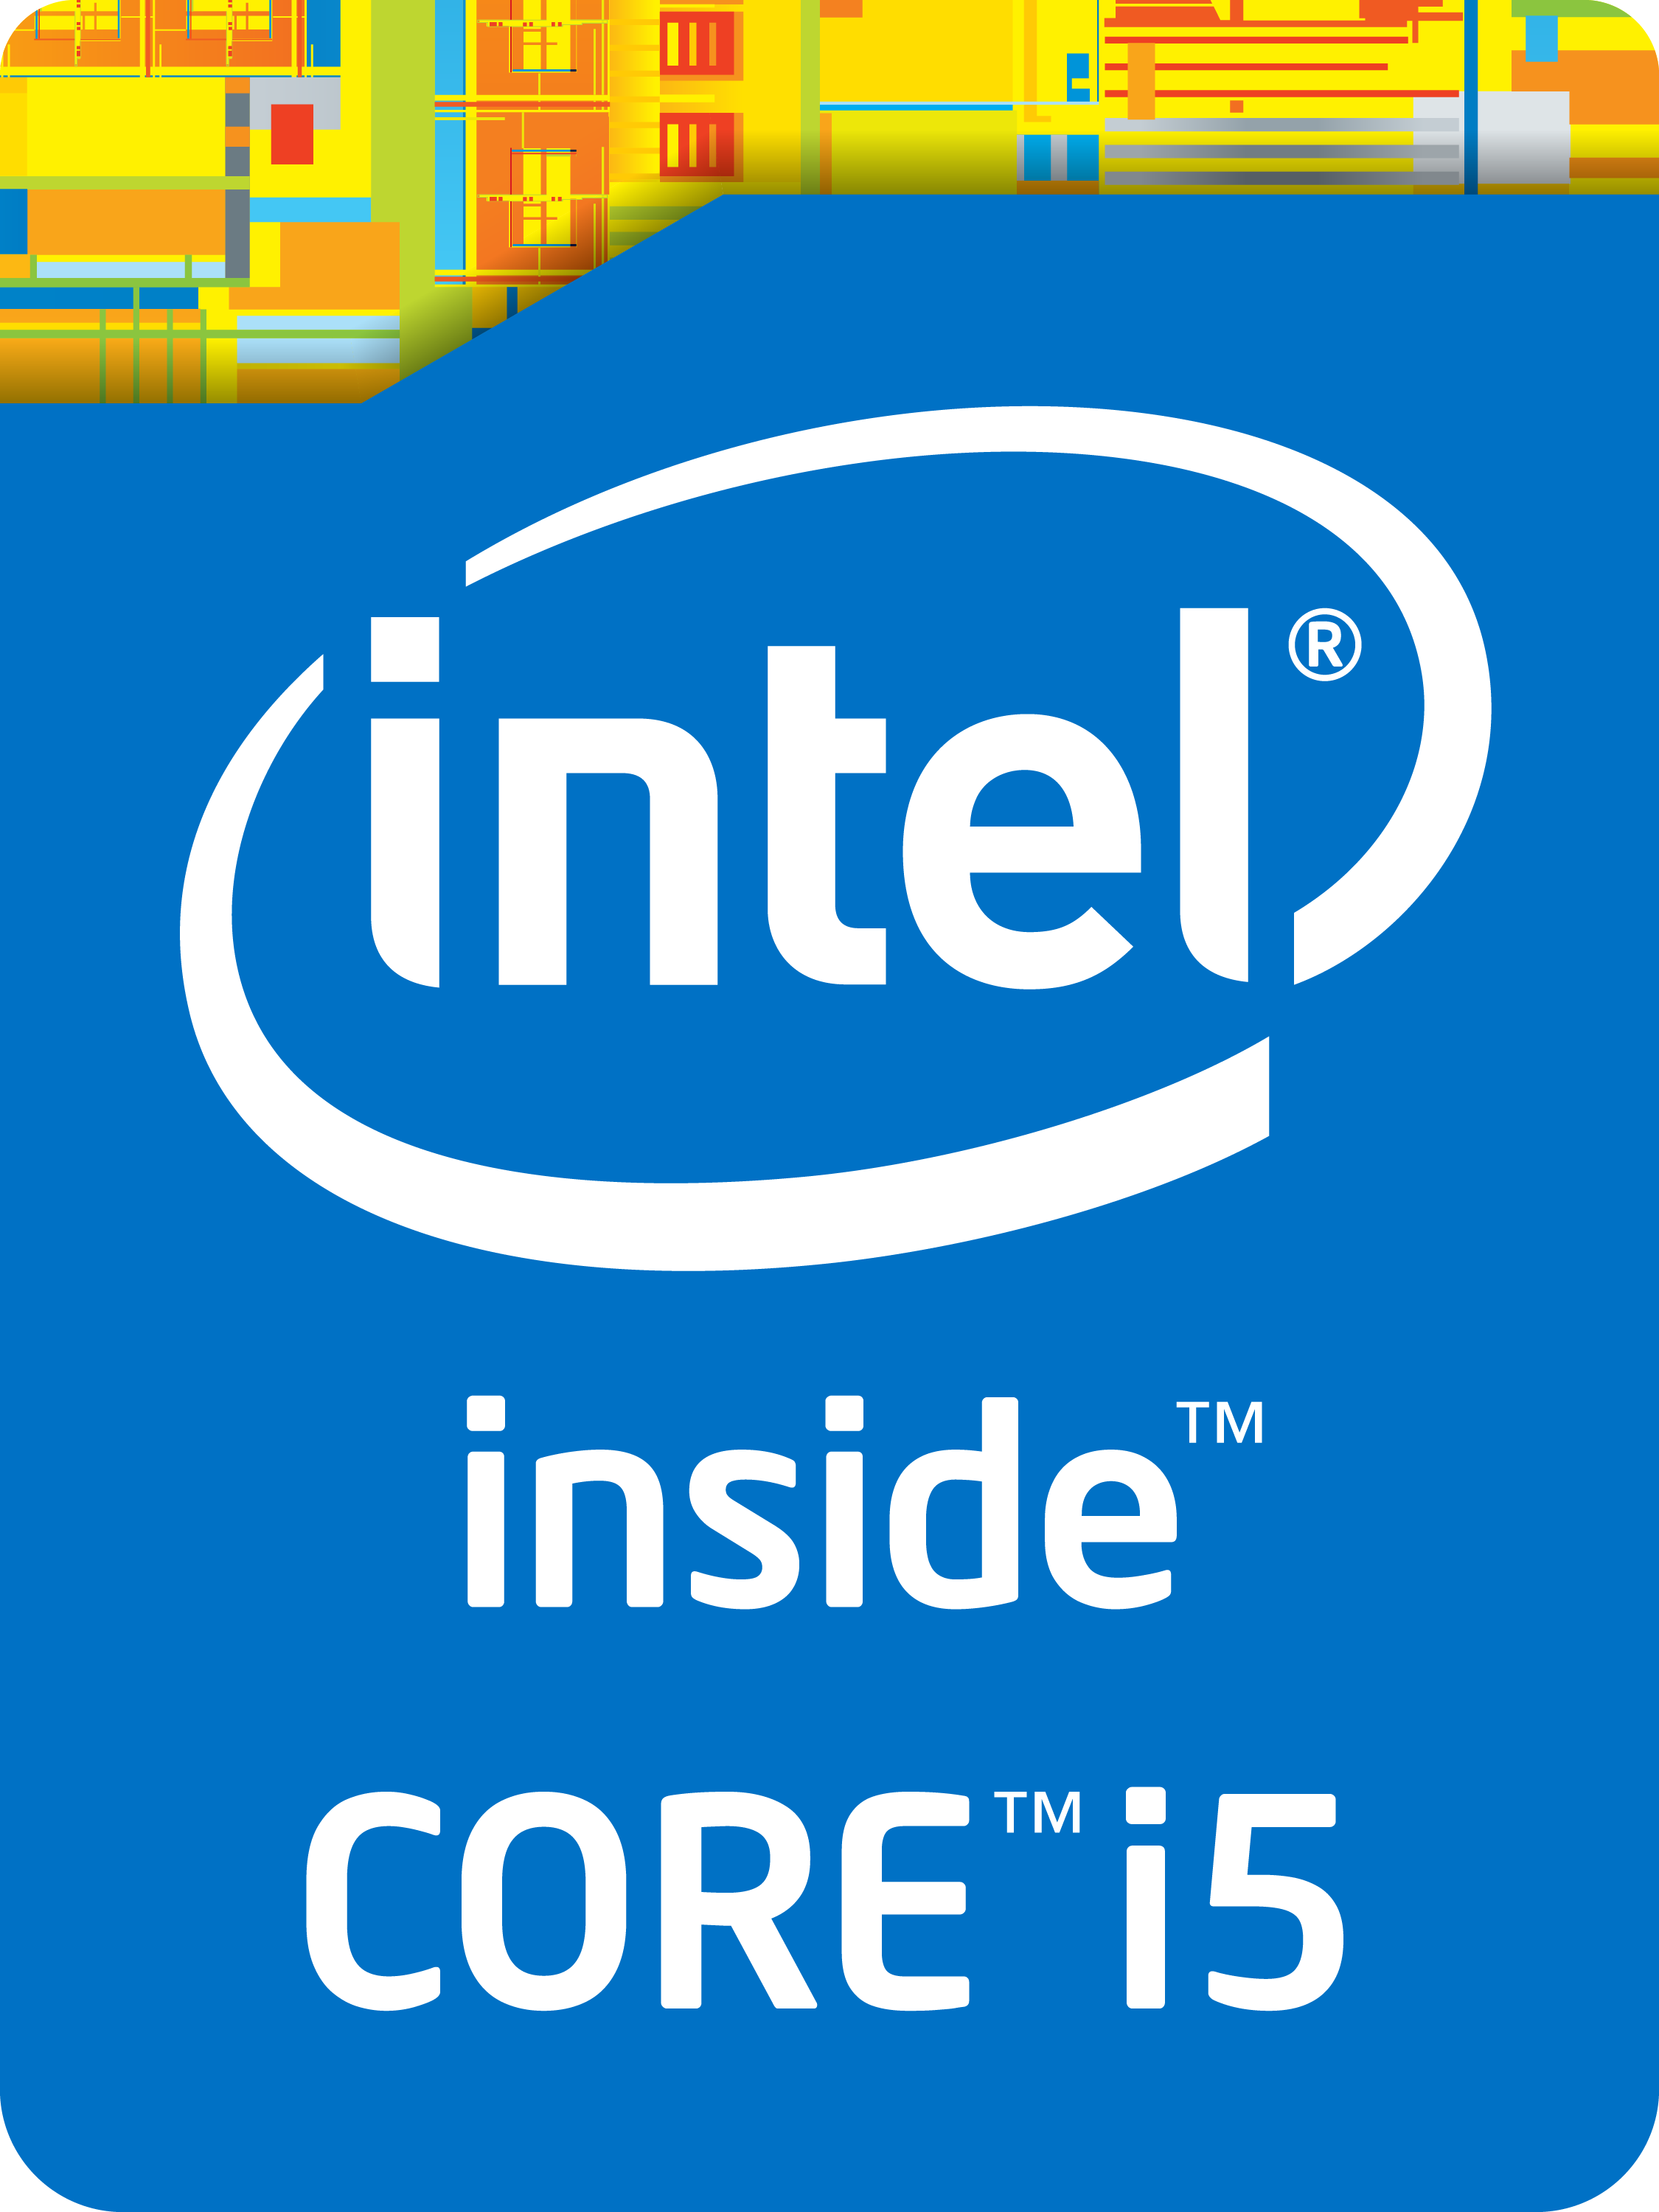 https://www.notebookcheck.net/uploads/tx_nbc2/4th_Generation_Intel___CoreOE_i5_Processor_Badge.png